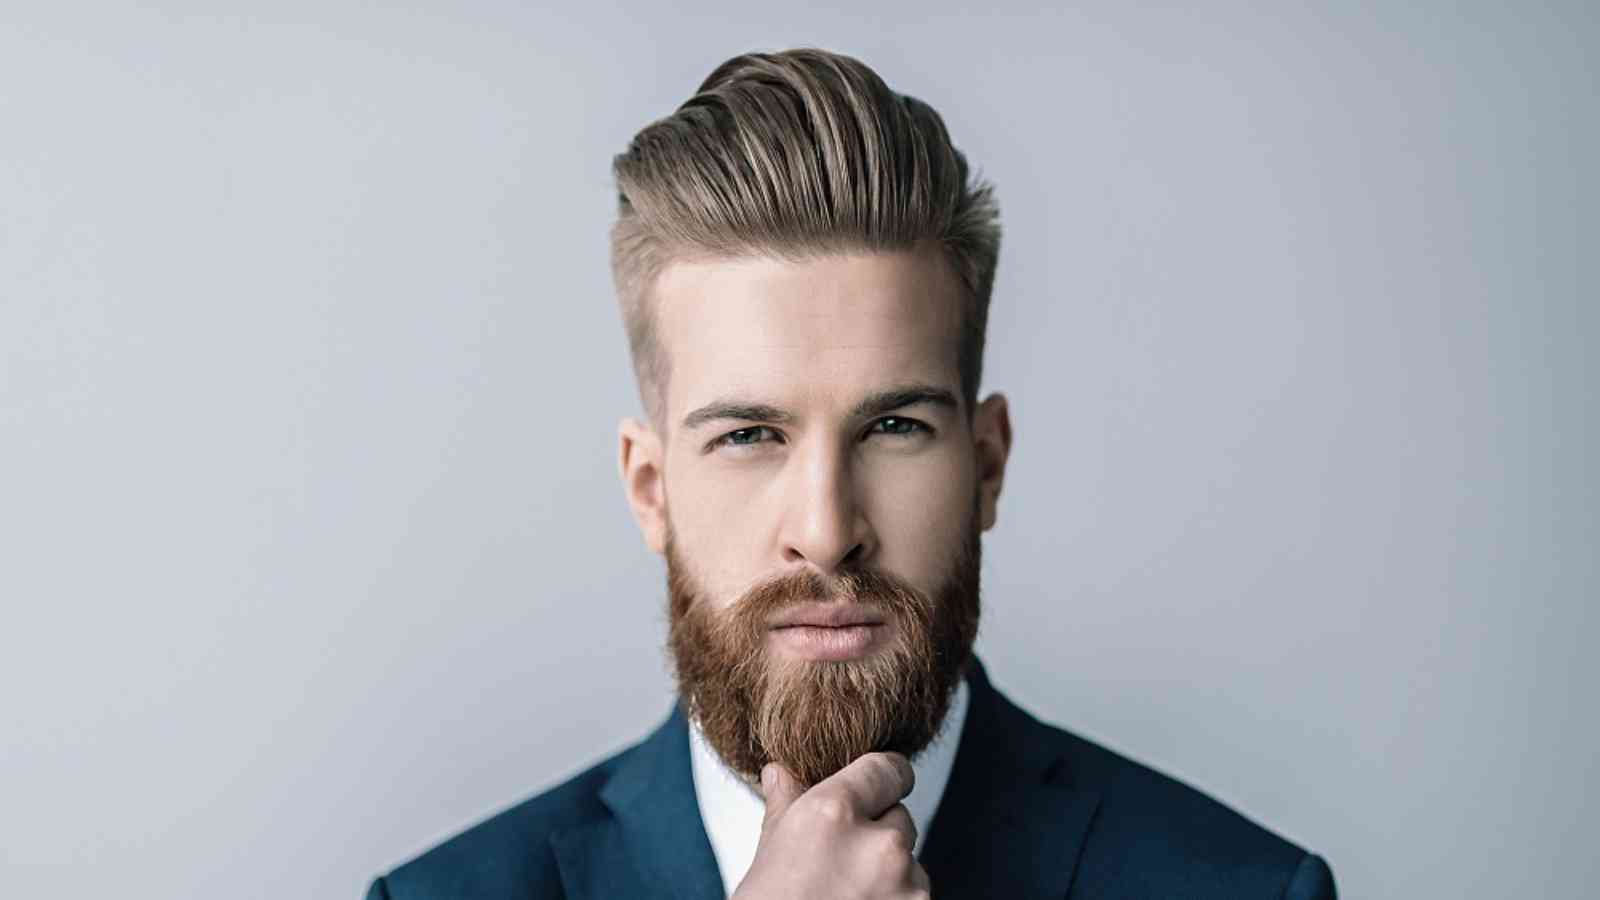 World Beard Day 2022: Pros and Cons of Having a Beard